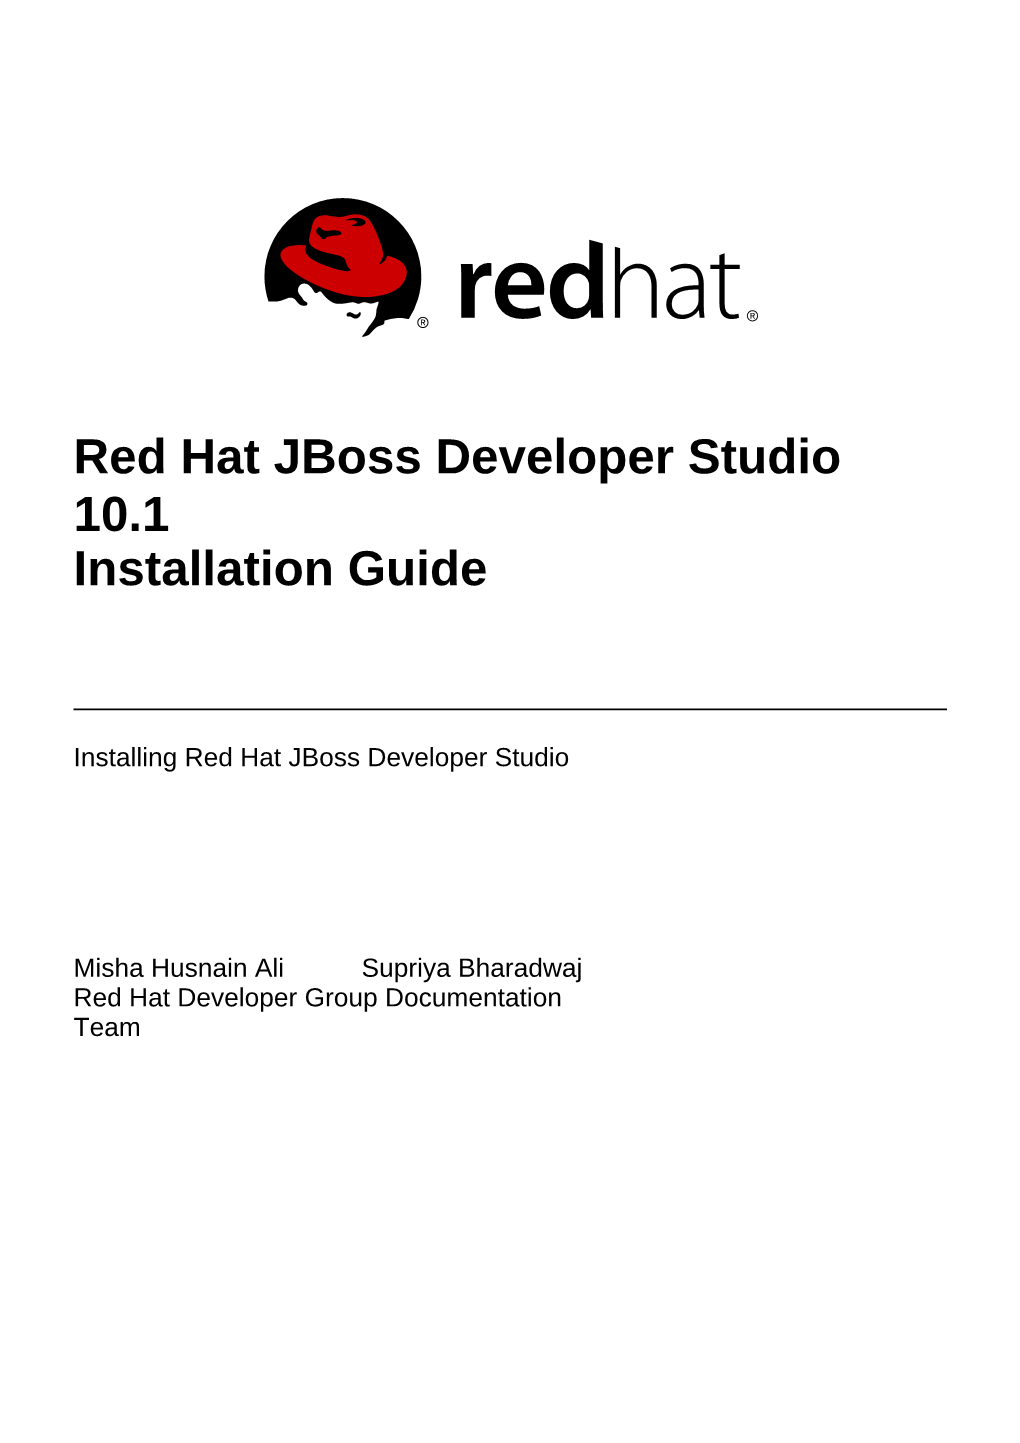 Red Hat Jboss Developer Studio 10.1 Installation Guide